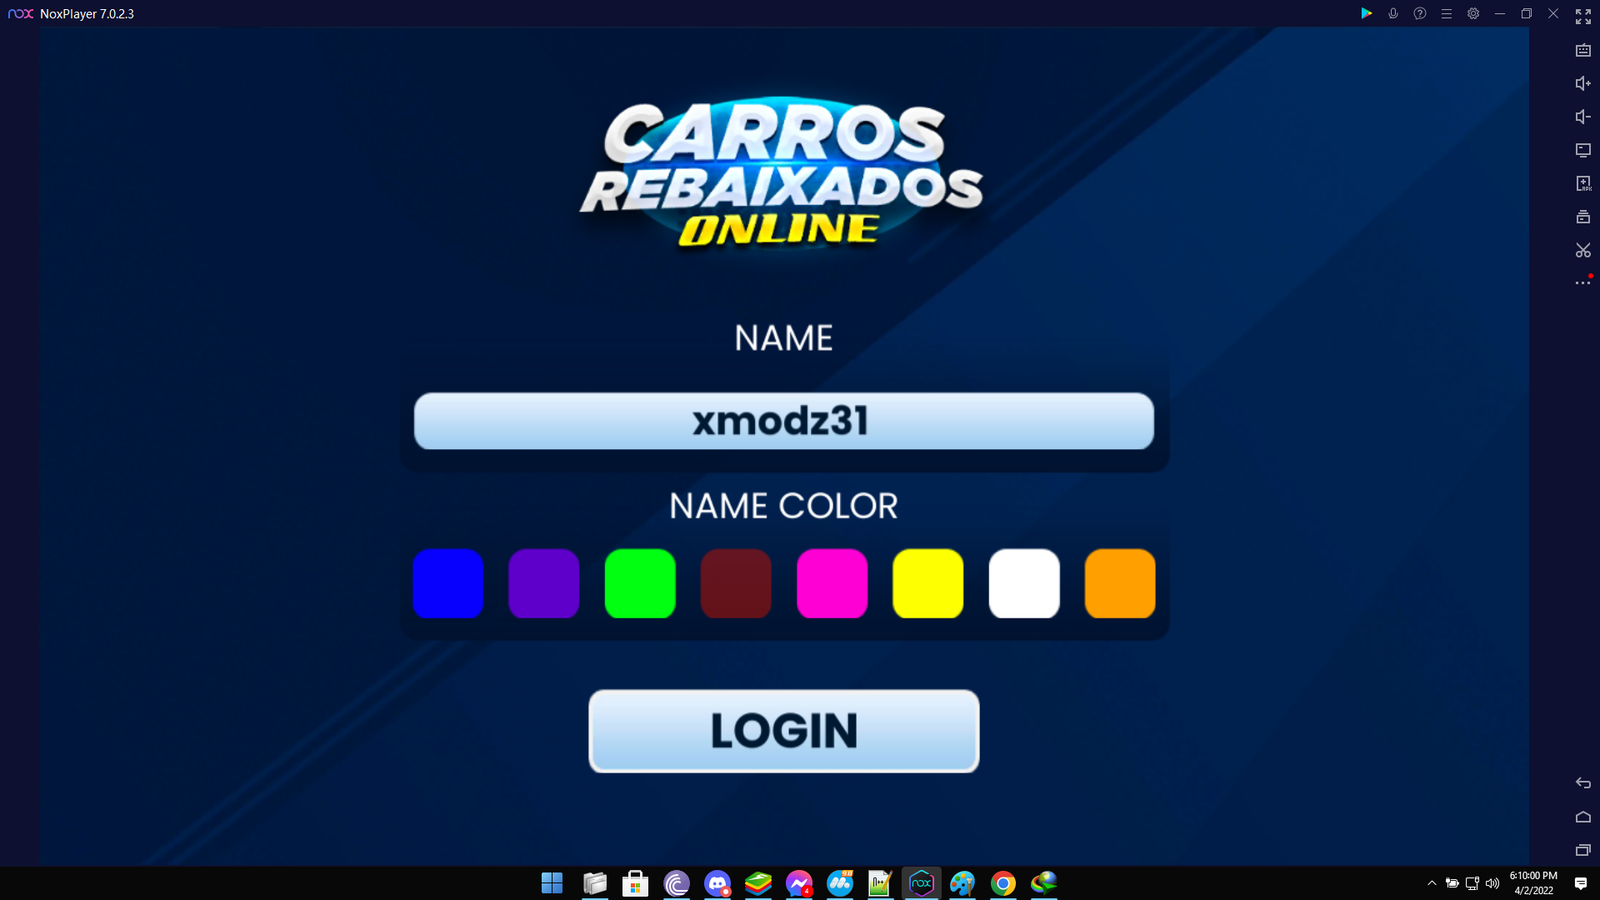 Free download Carros Rebaixados Online APK for Android